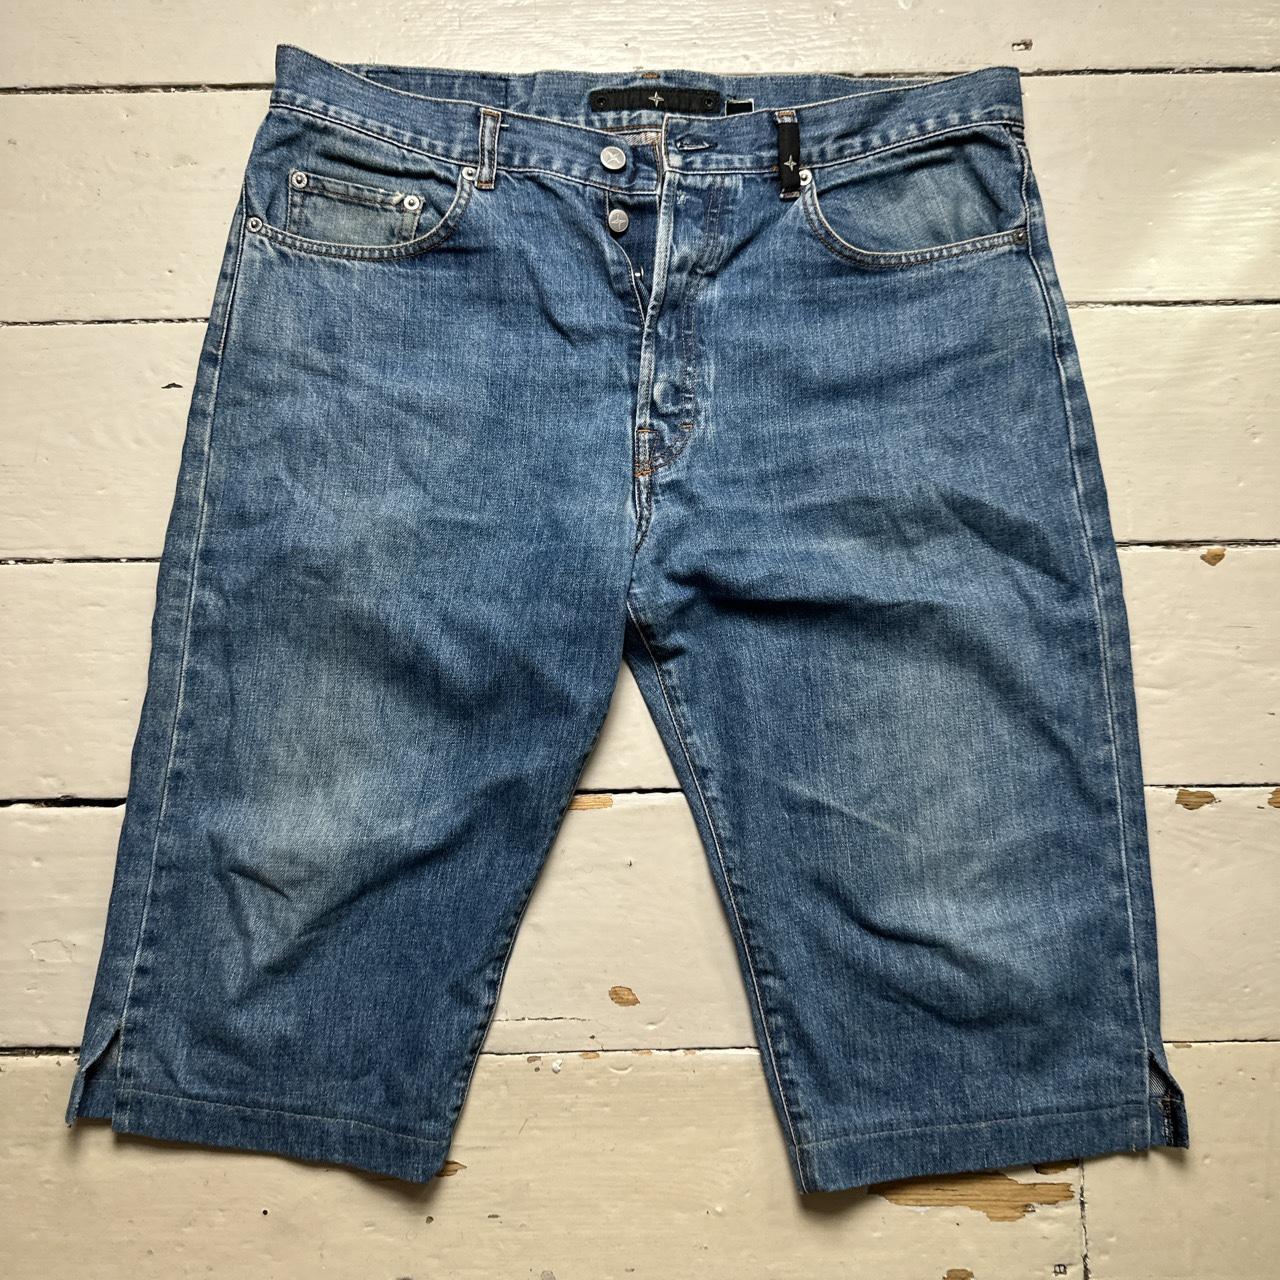 Stone Island Denims Vintage Jean Shorts Jorts Navy Blue